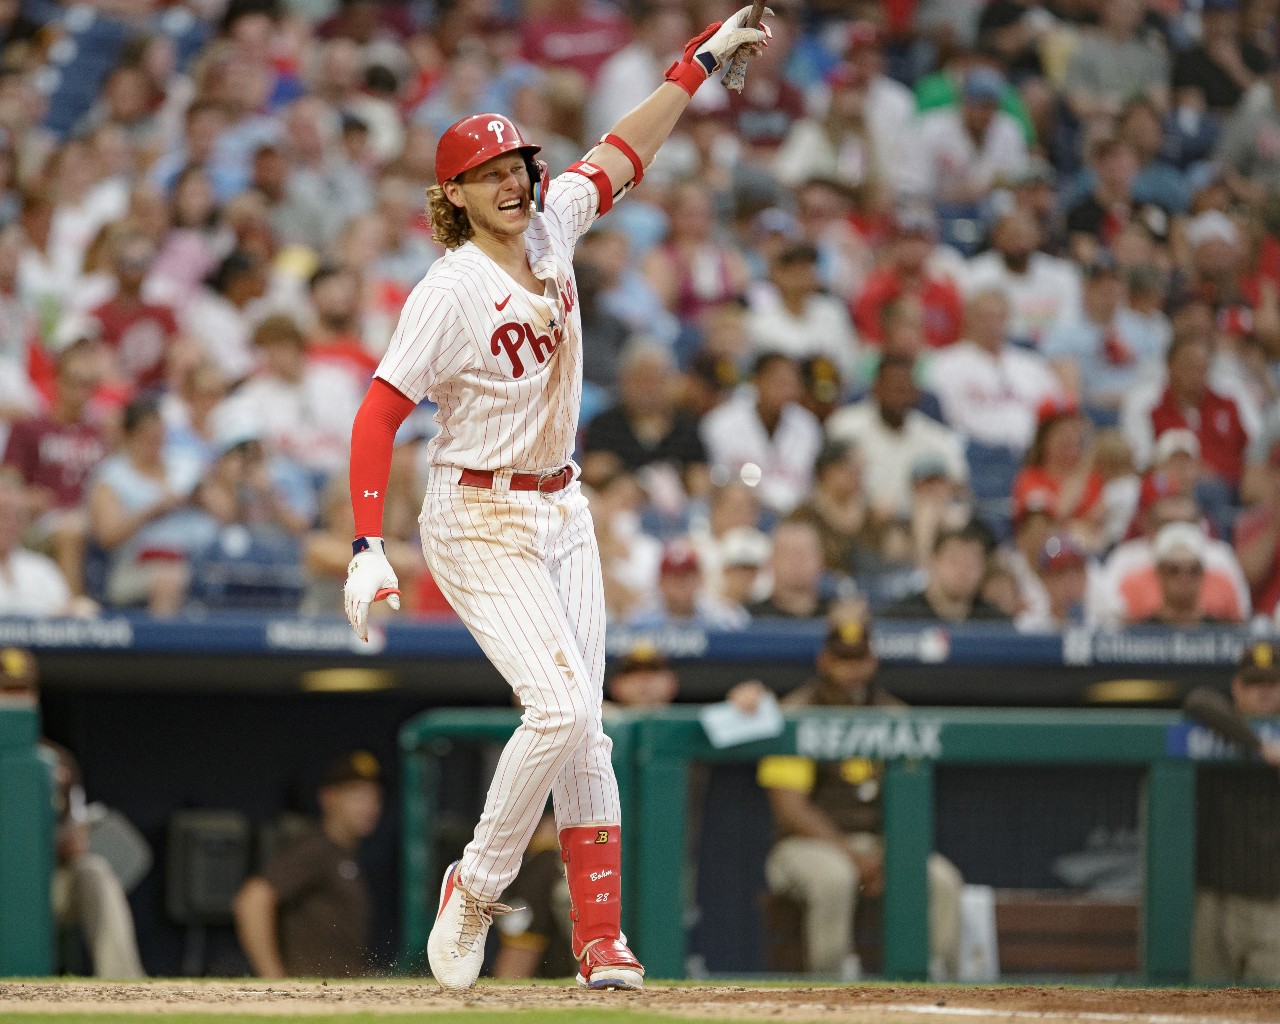 MLB Network - Alec Bohm and the Philadelphia Phillies take